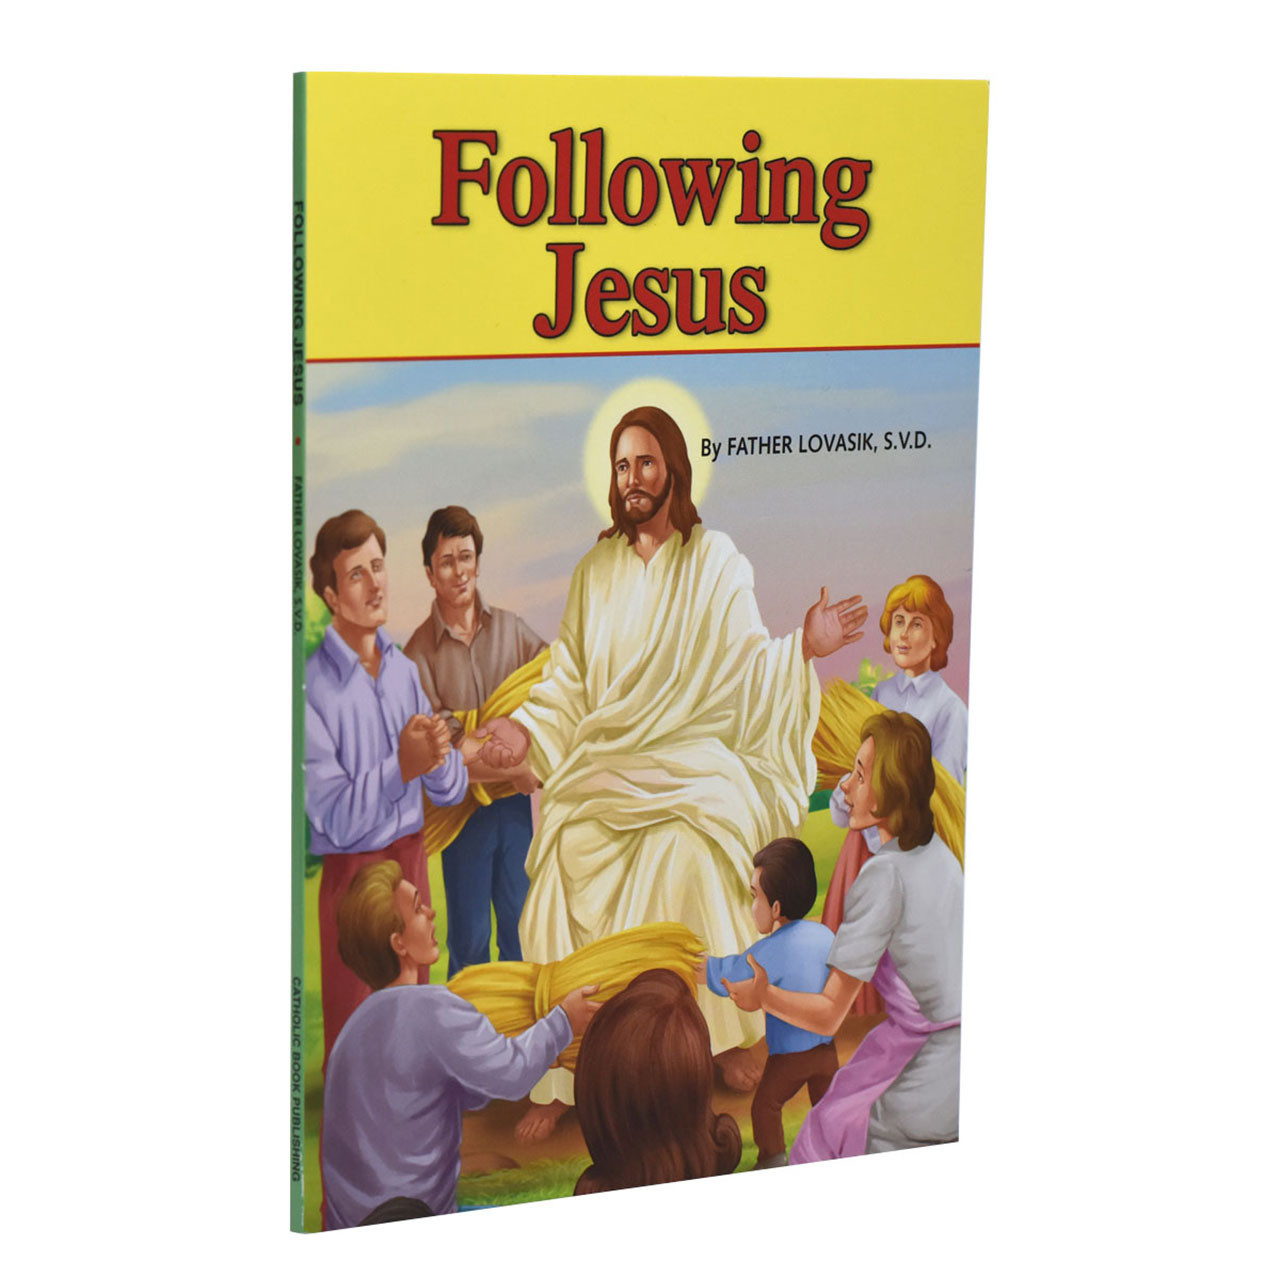 Following Jesus by Fr. Lovasik, S.V.D.